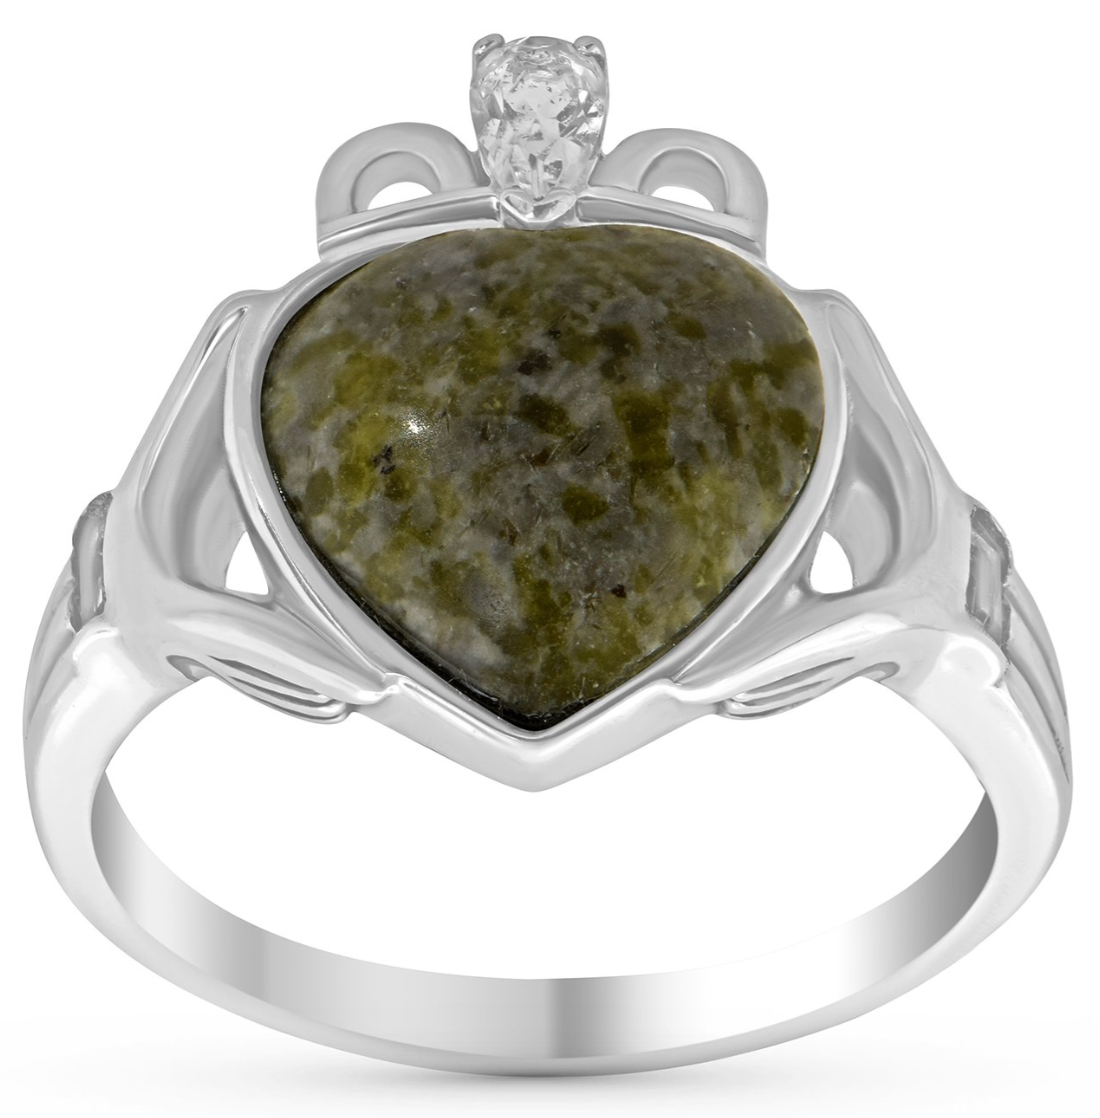 Connemara Marble Claddagh - Ring